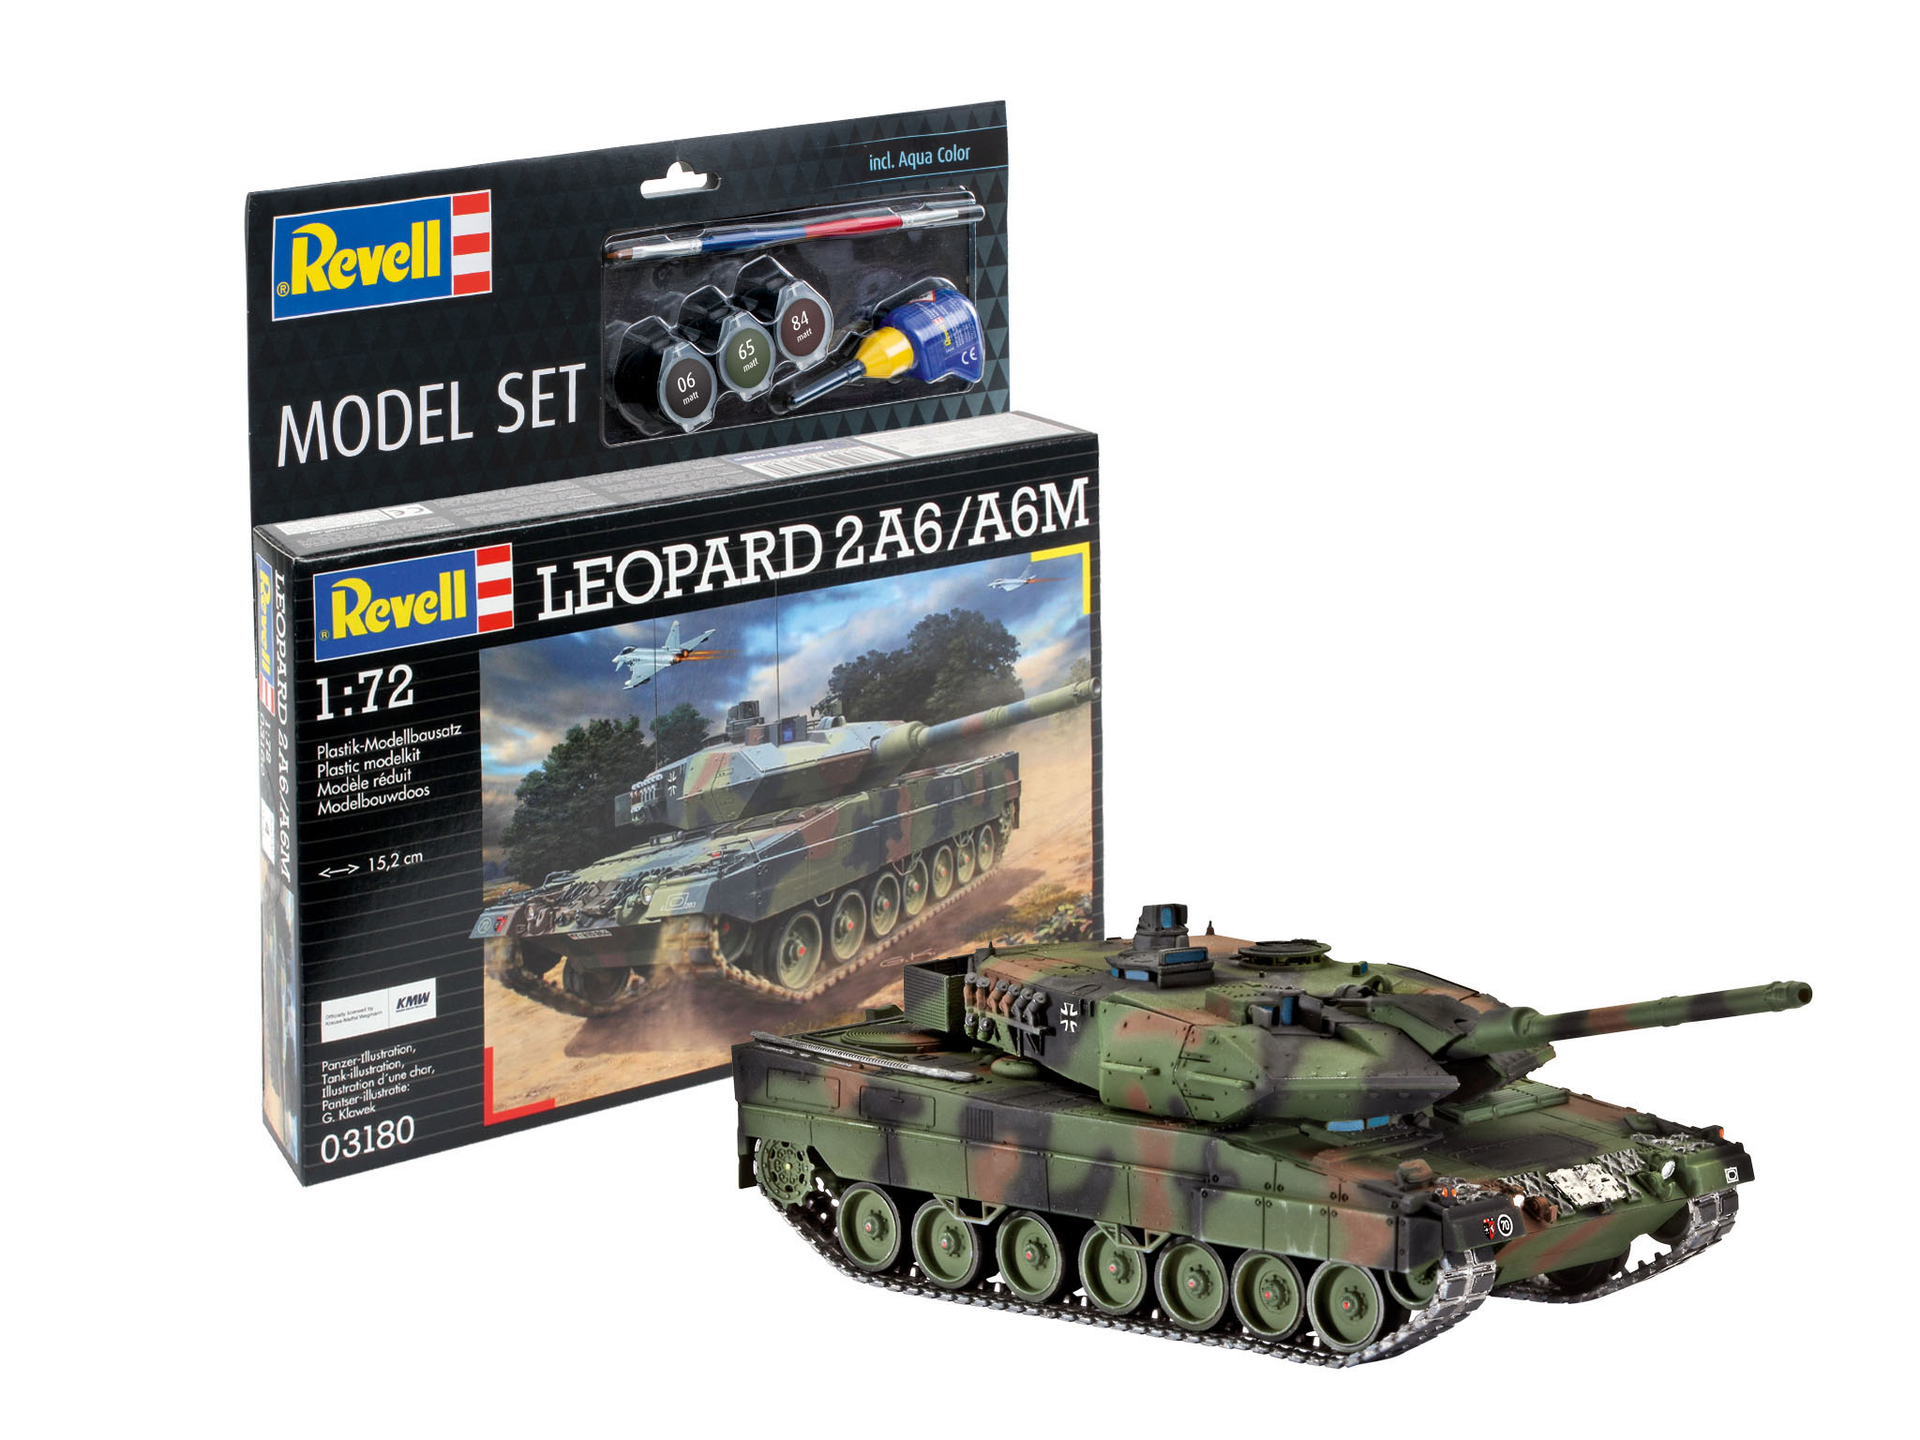 Збірна модель Revell набір Танк Леопард 2A6/A6M масштаб 1:72, 168 деталей (RVL-63180) - фото 2